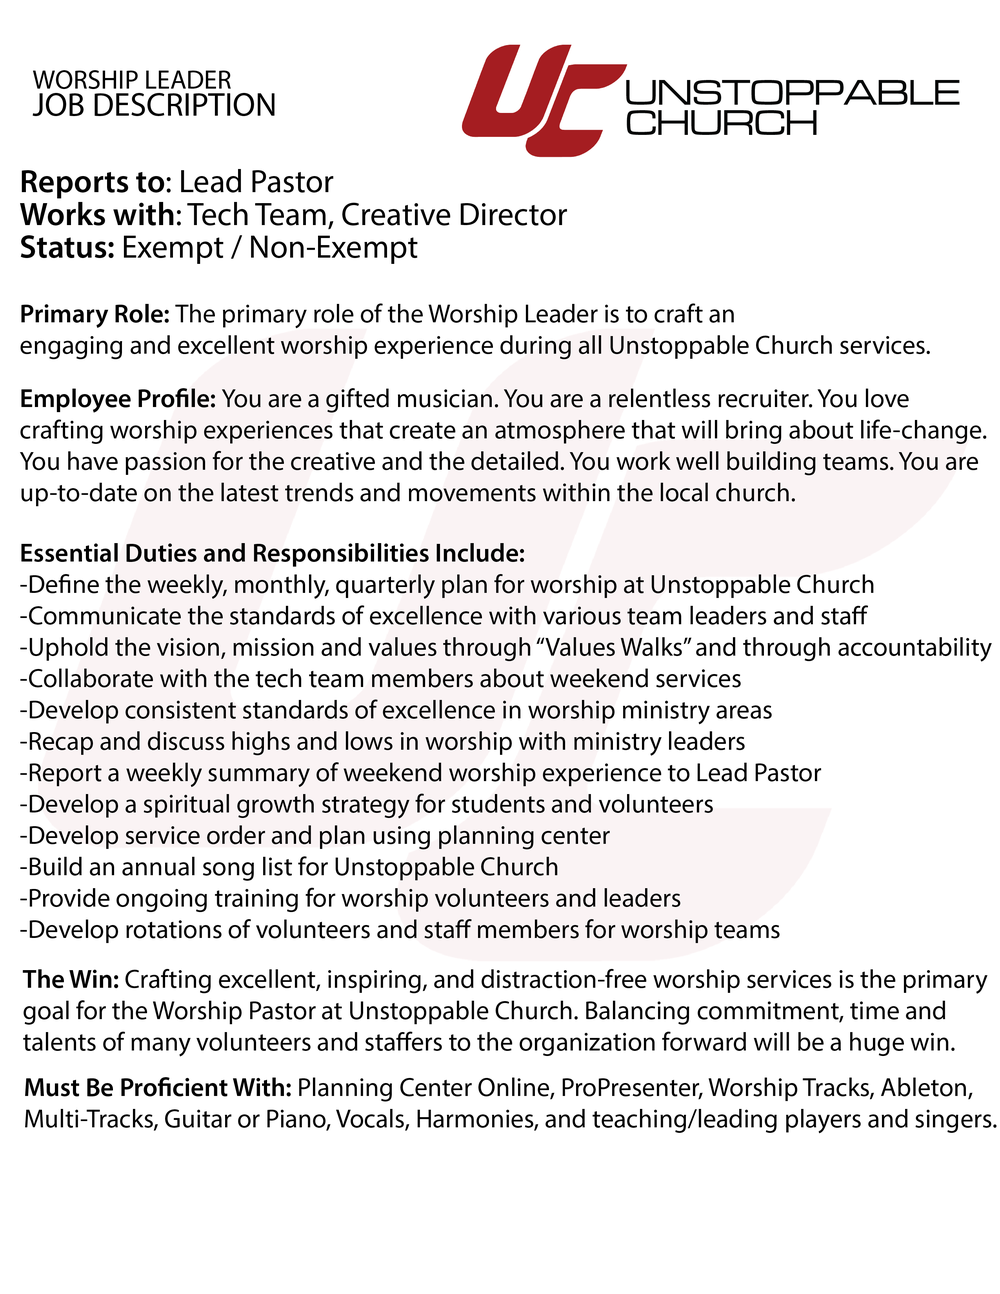 Church ministry leadership job descriptions